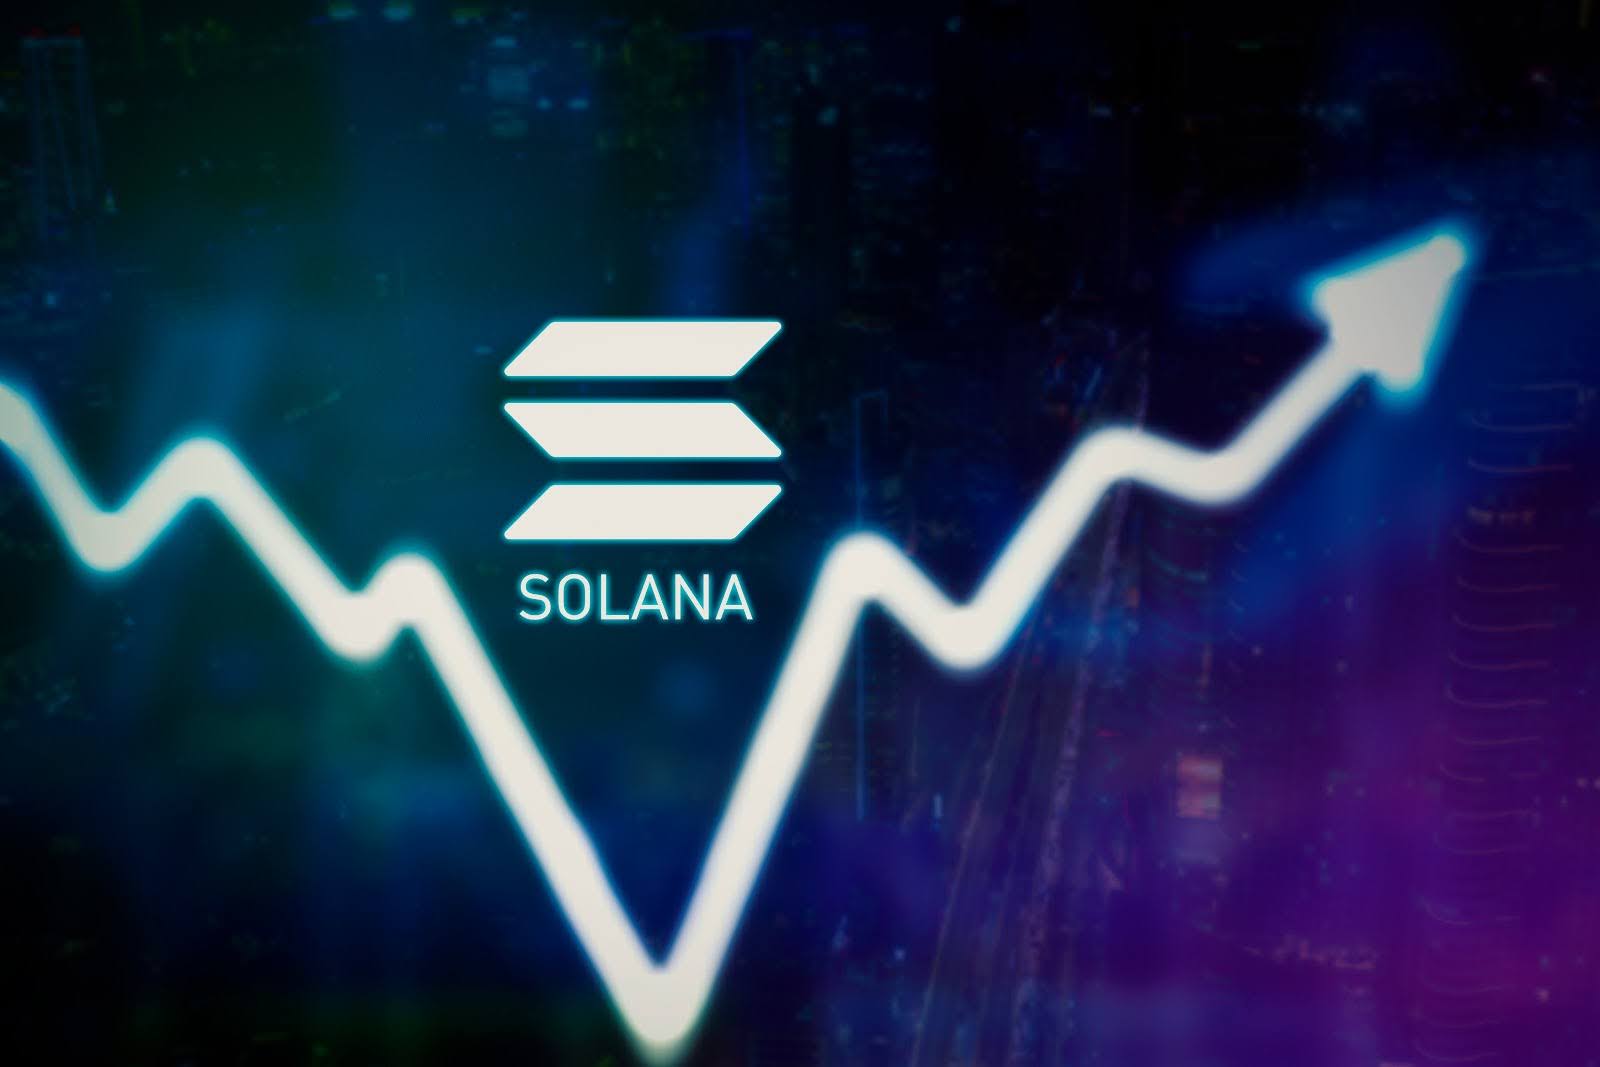 Solana (SOL) price prediction as new Solana meme coin launches tomorrow